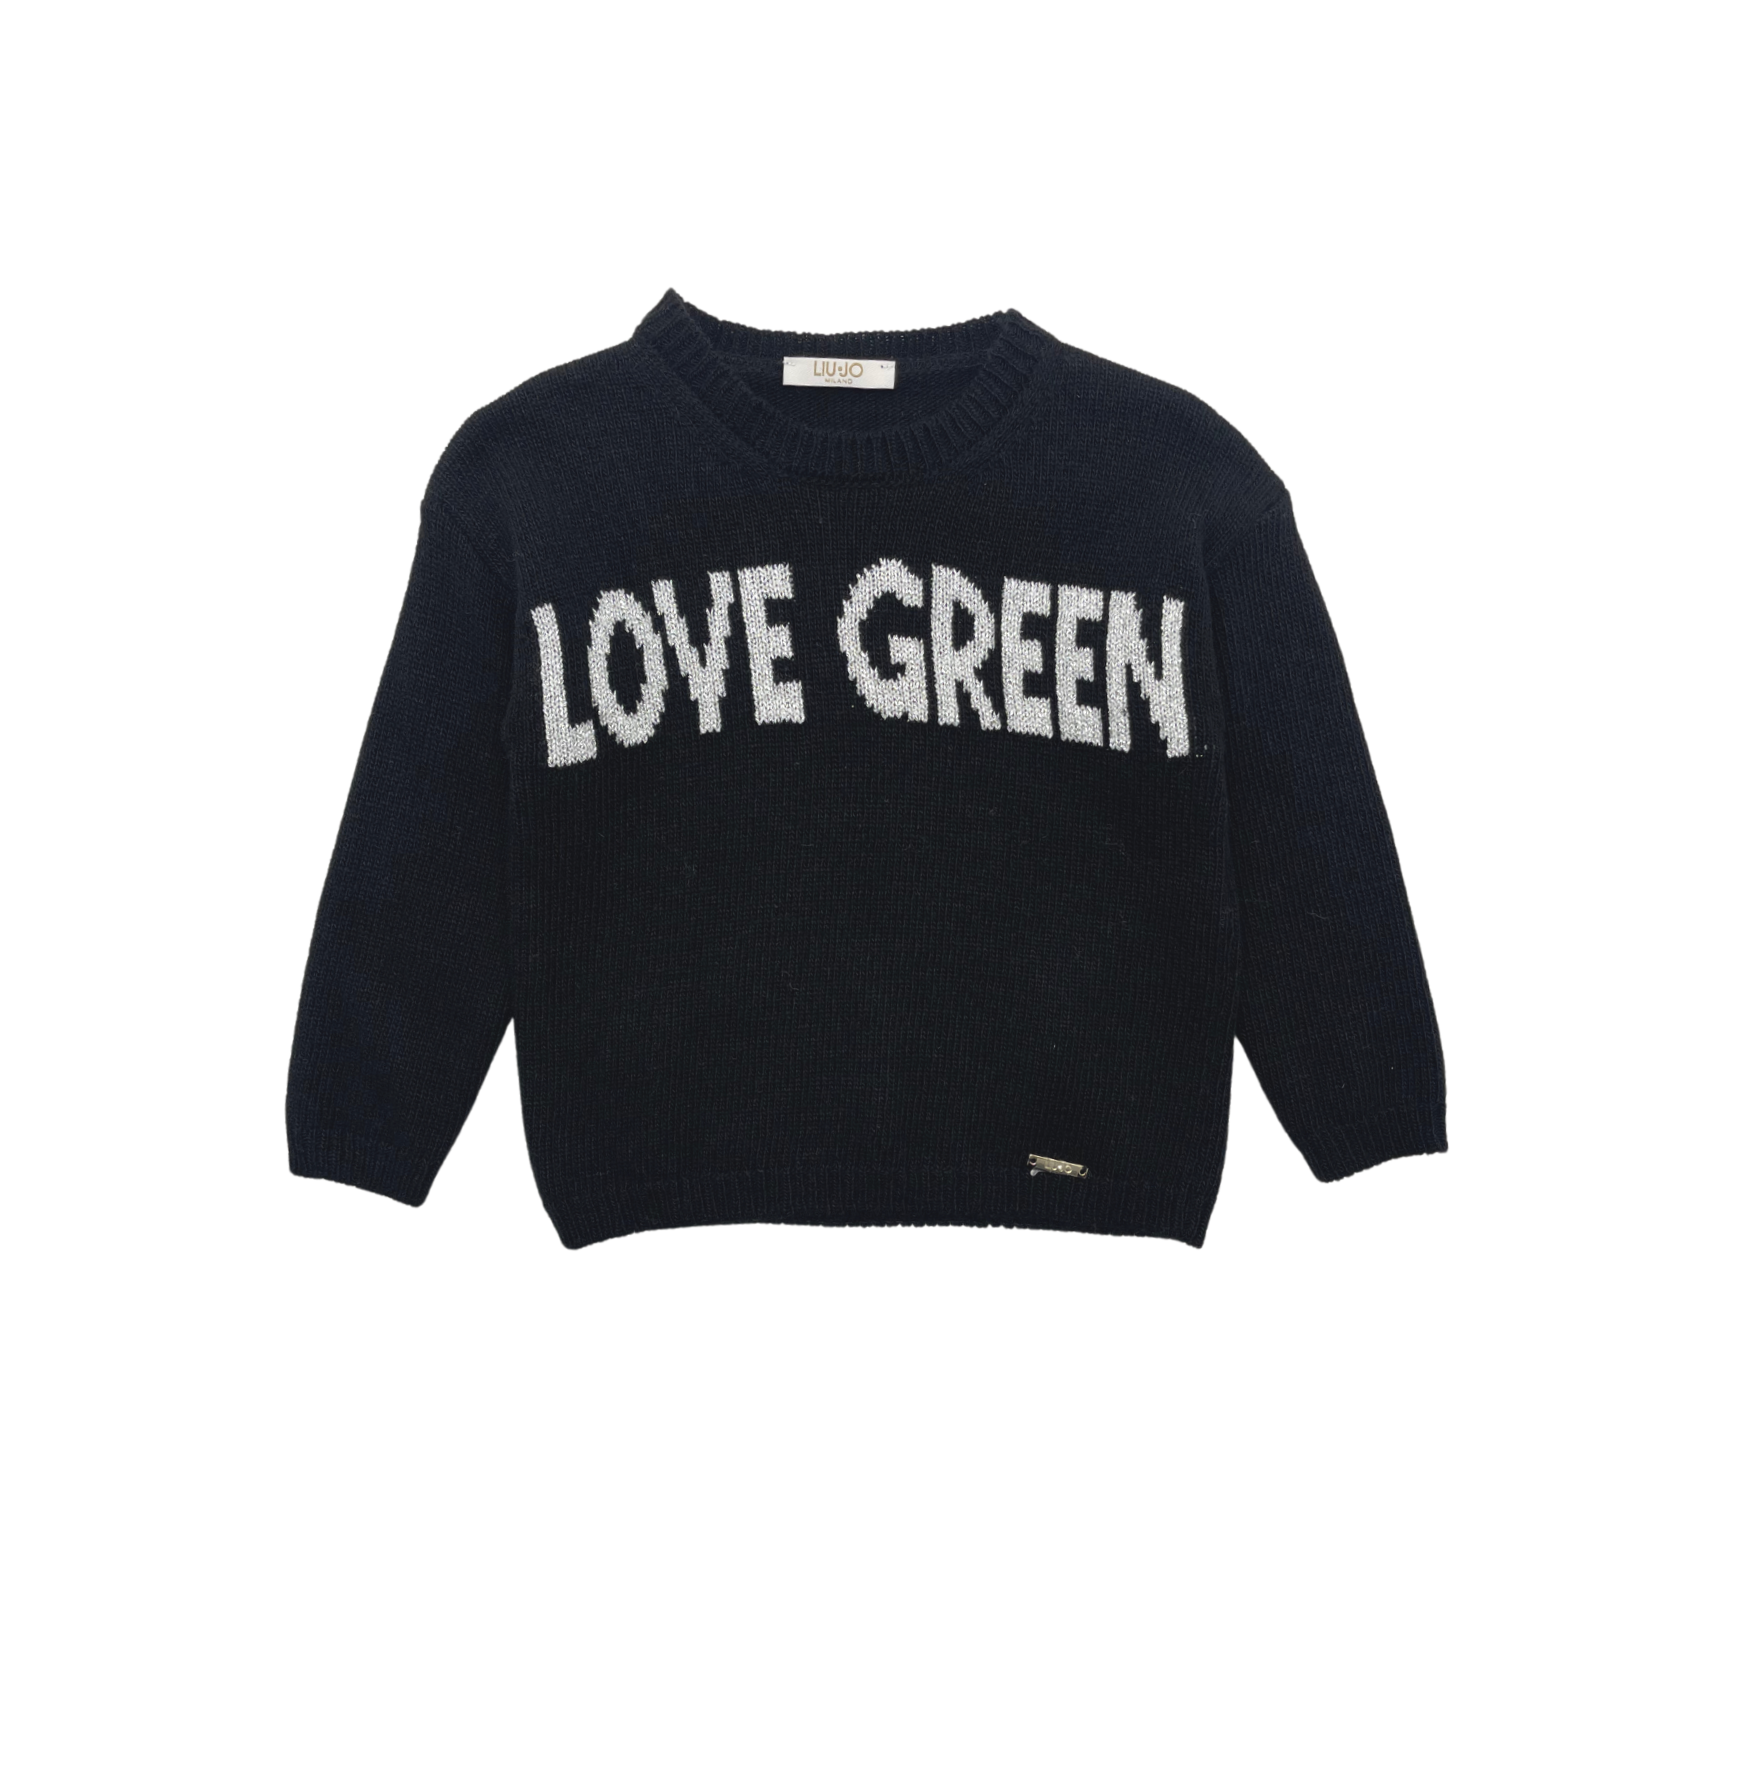 LIU.JO - "love green" jumper - 18 months